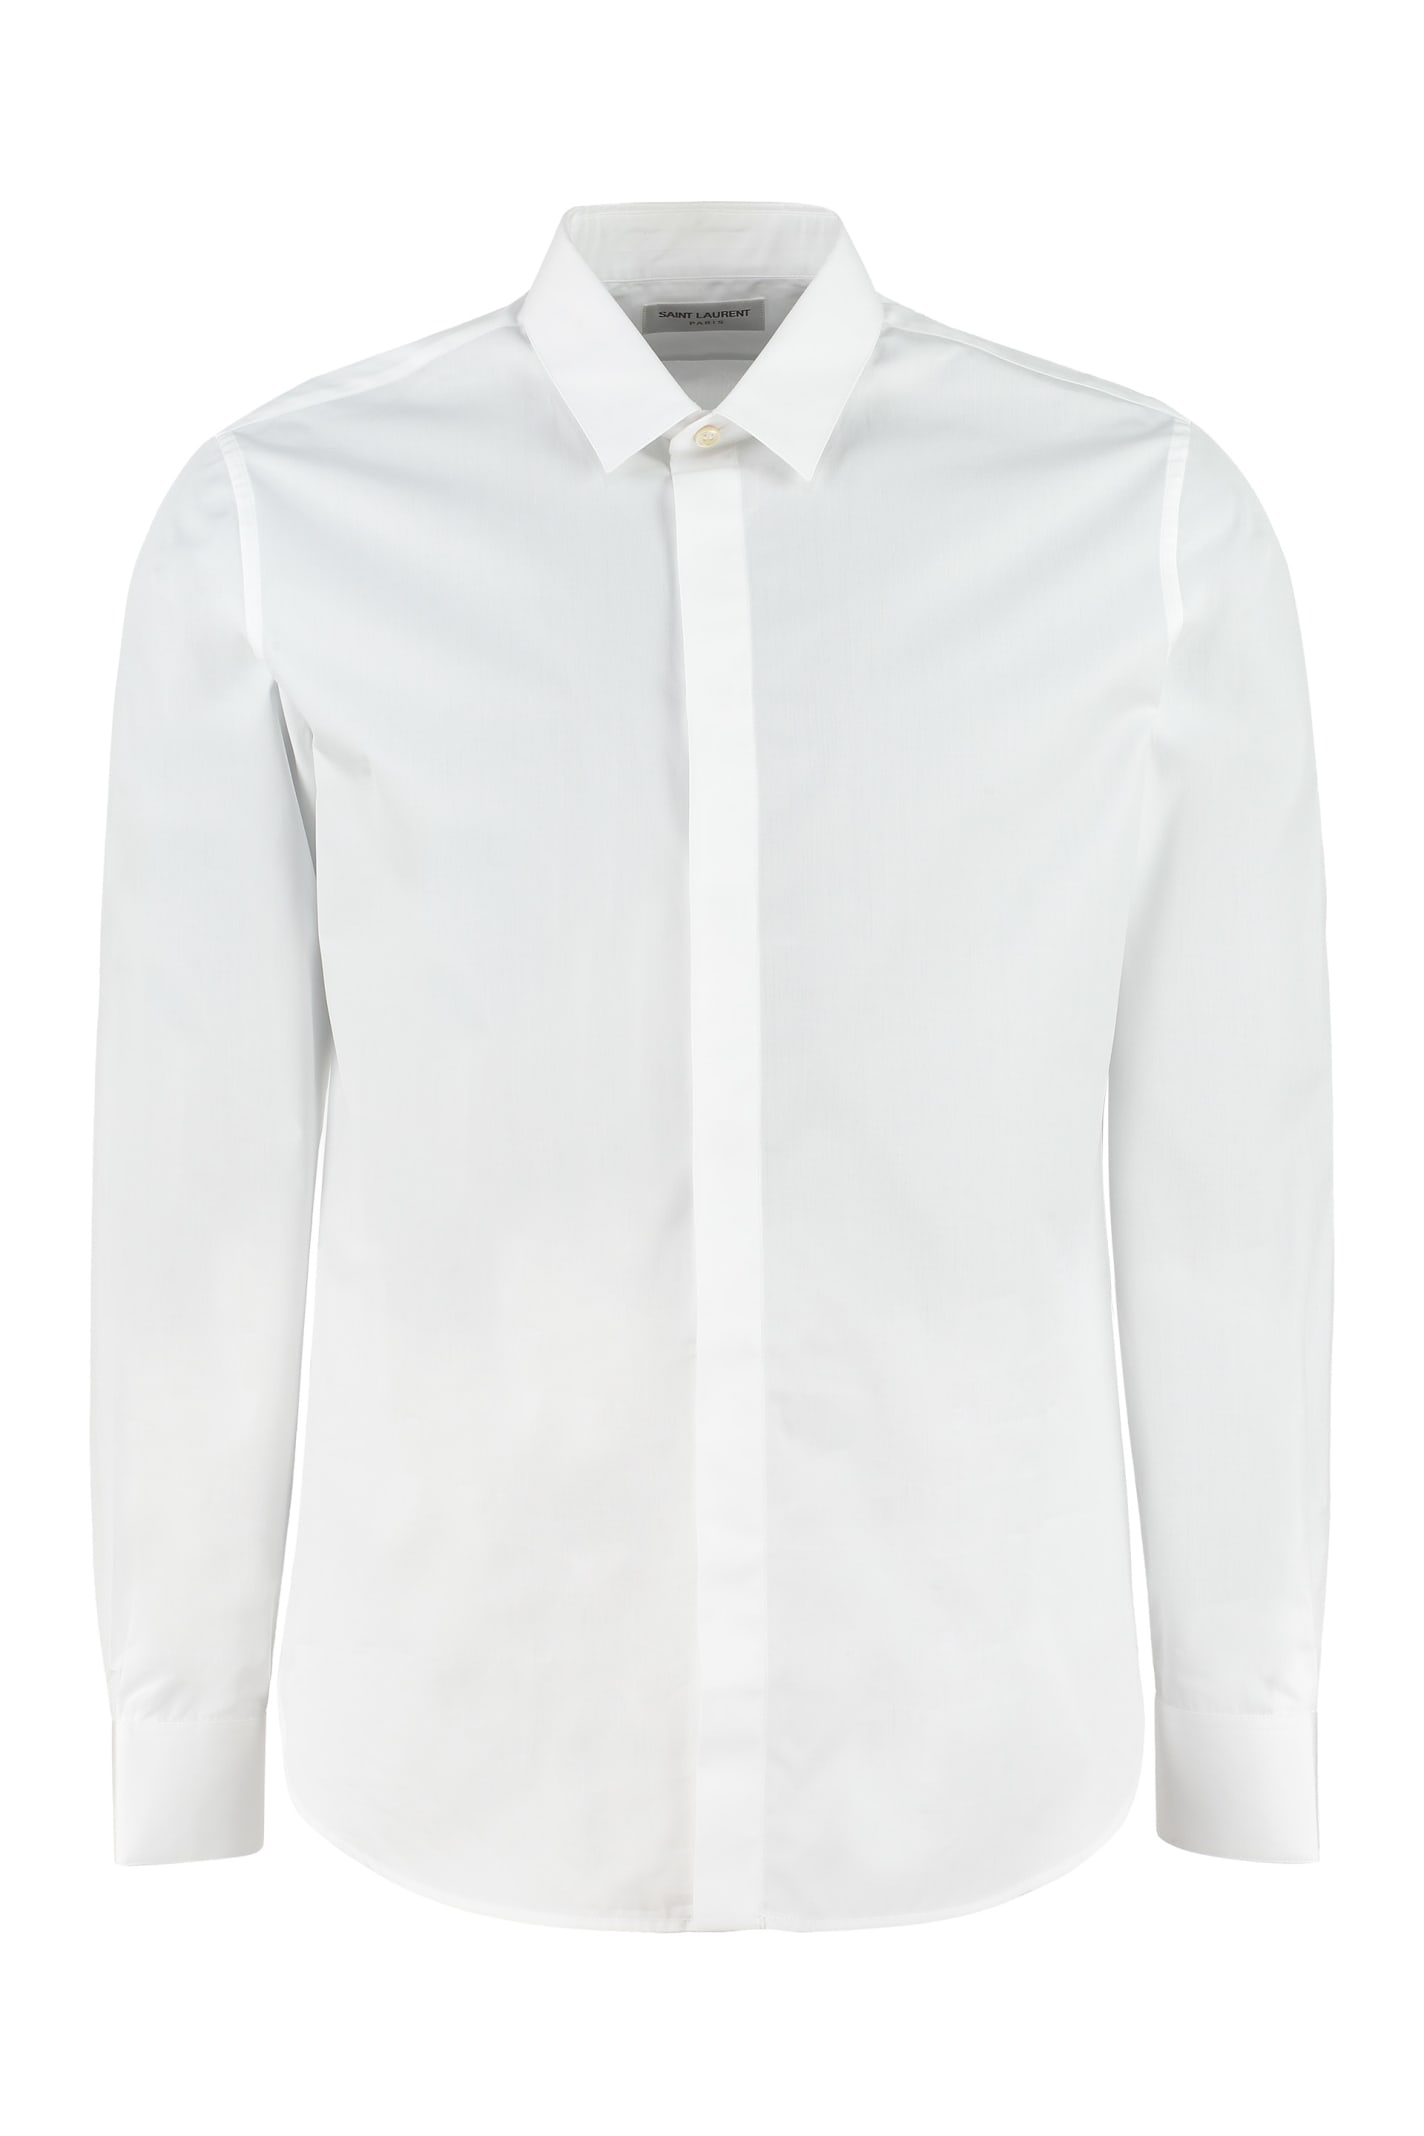 Saint Laurent Long Sleeve Cotton Shirt